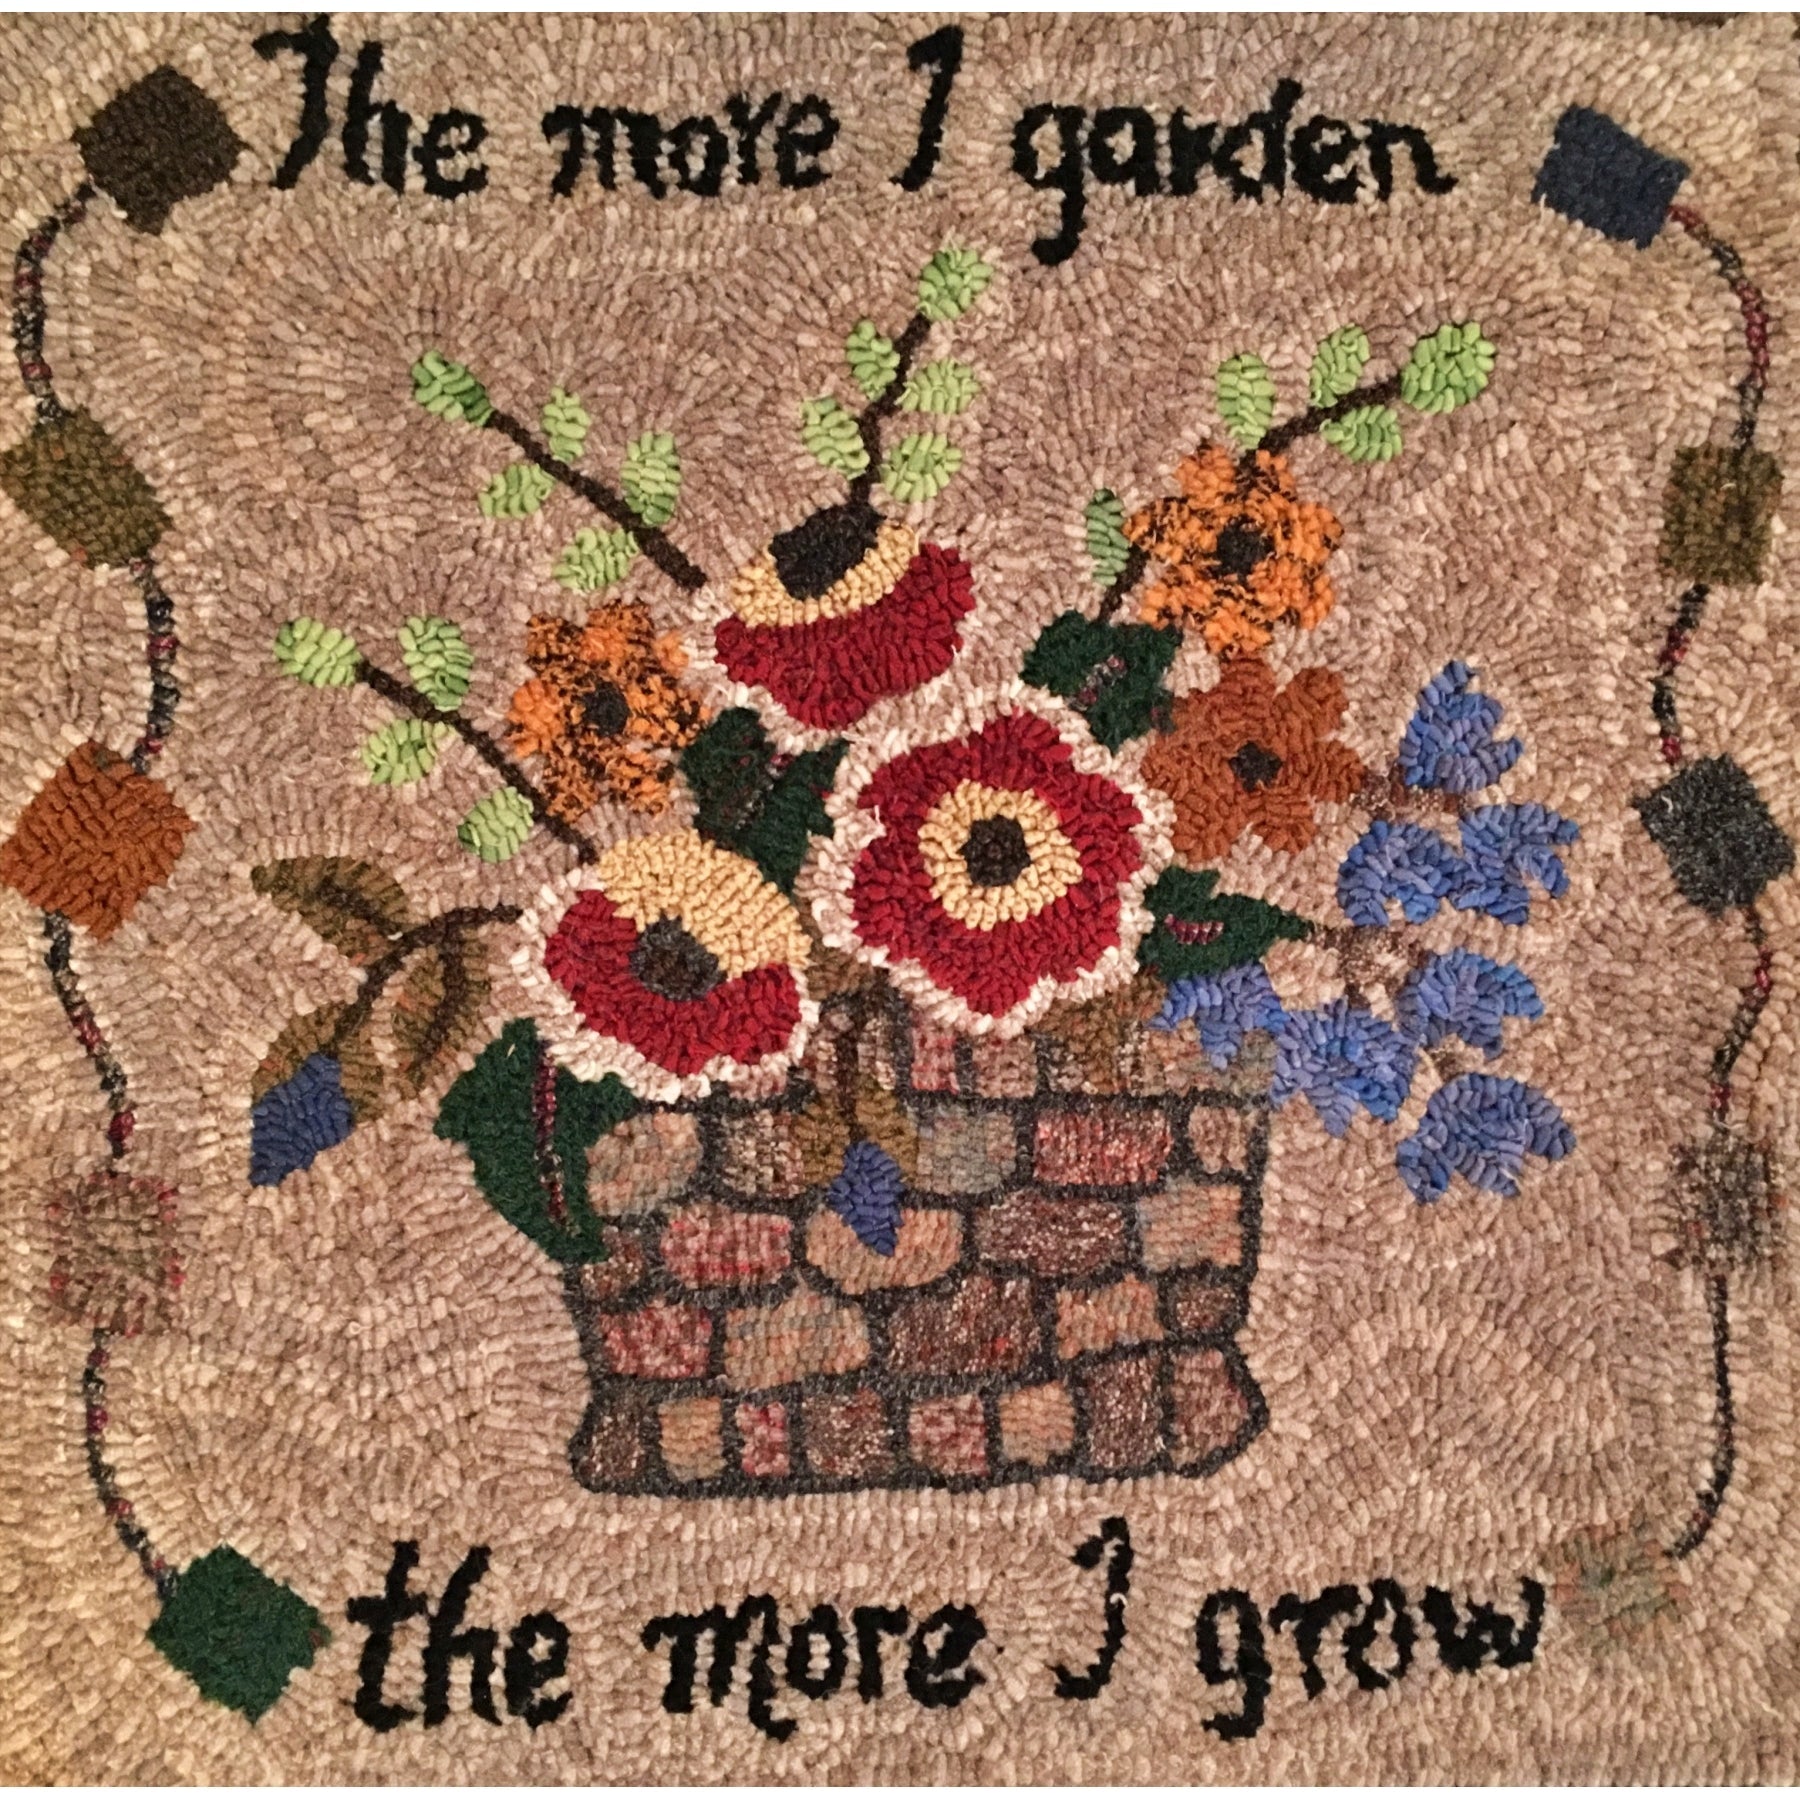 The More I Garden, rug hooked by Sondra Kellar